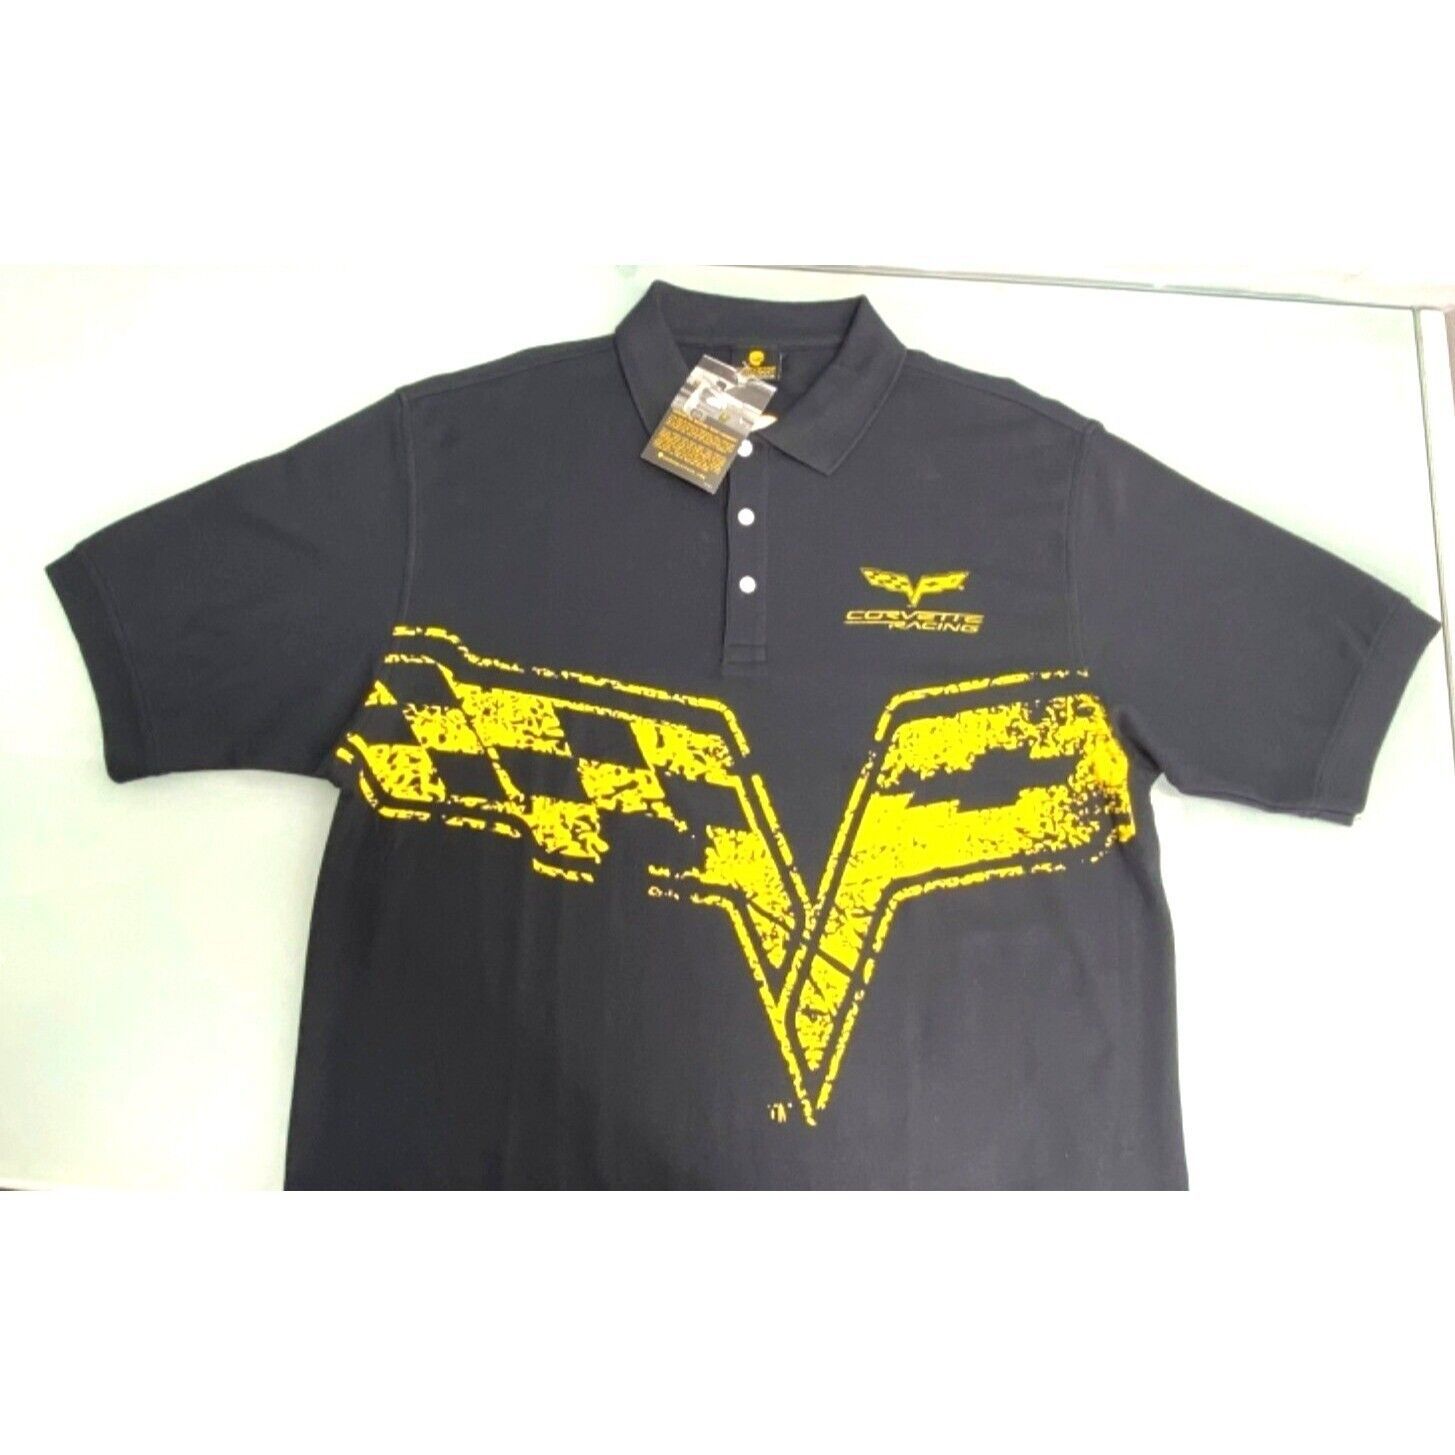 Primary image for Corvette Racing Men Shirt 100% Pima Cotton Black Short Sleeve Large L NEW NWT